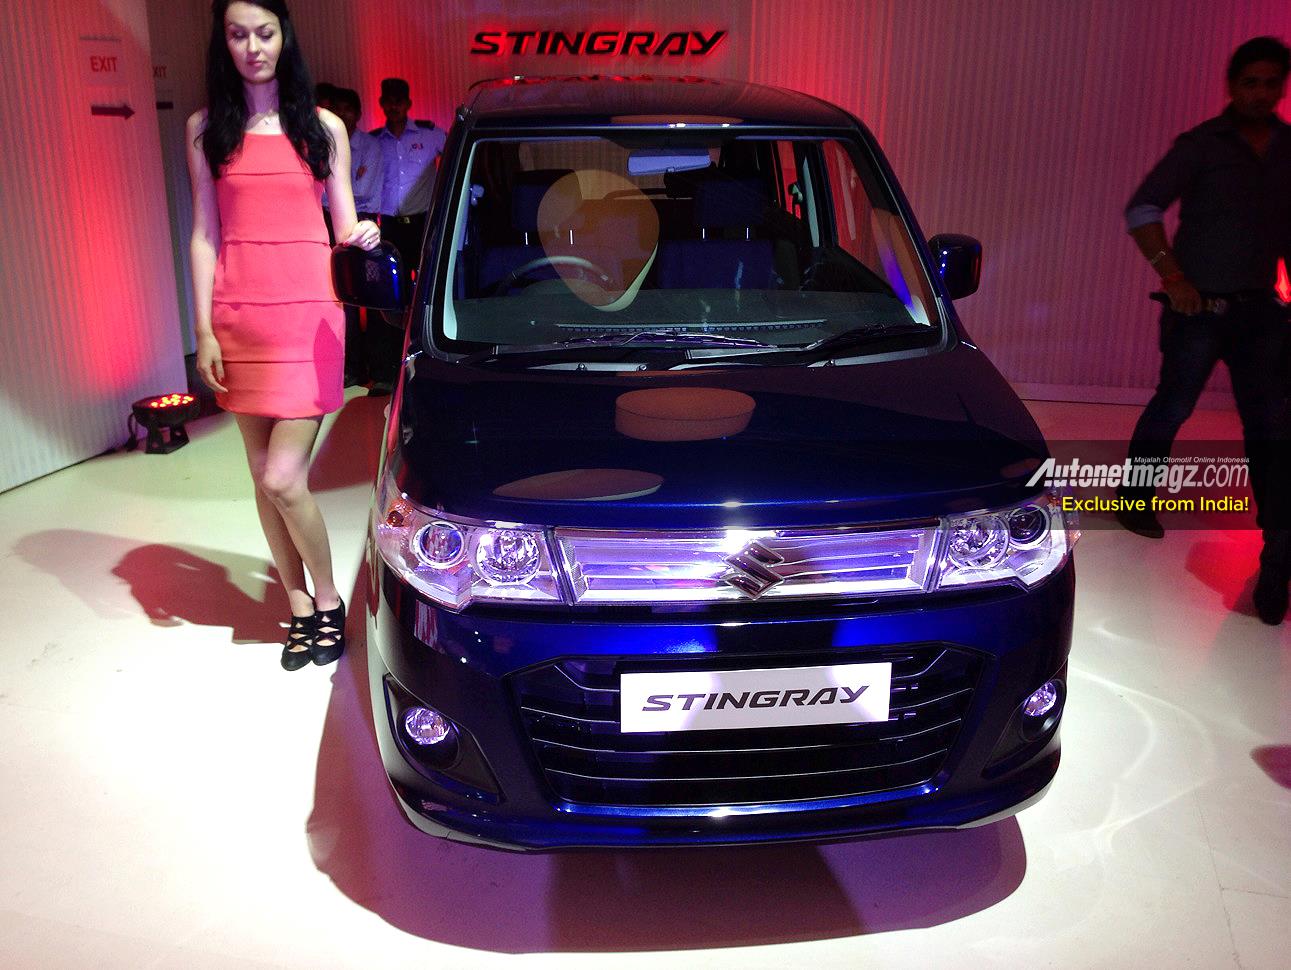 International, Suzuki Stingray india: Suzuki Stingray India Ternyata Sama Dengan Wagon R India